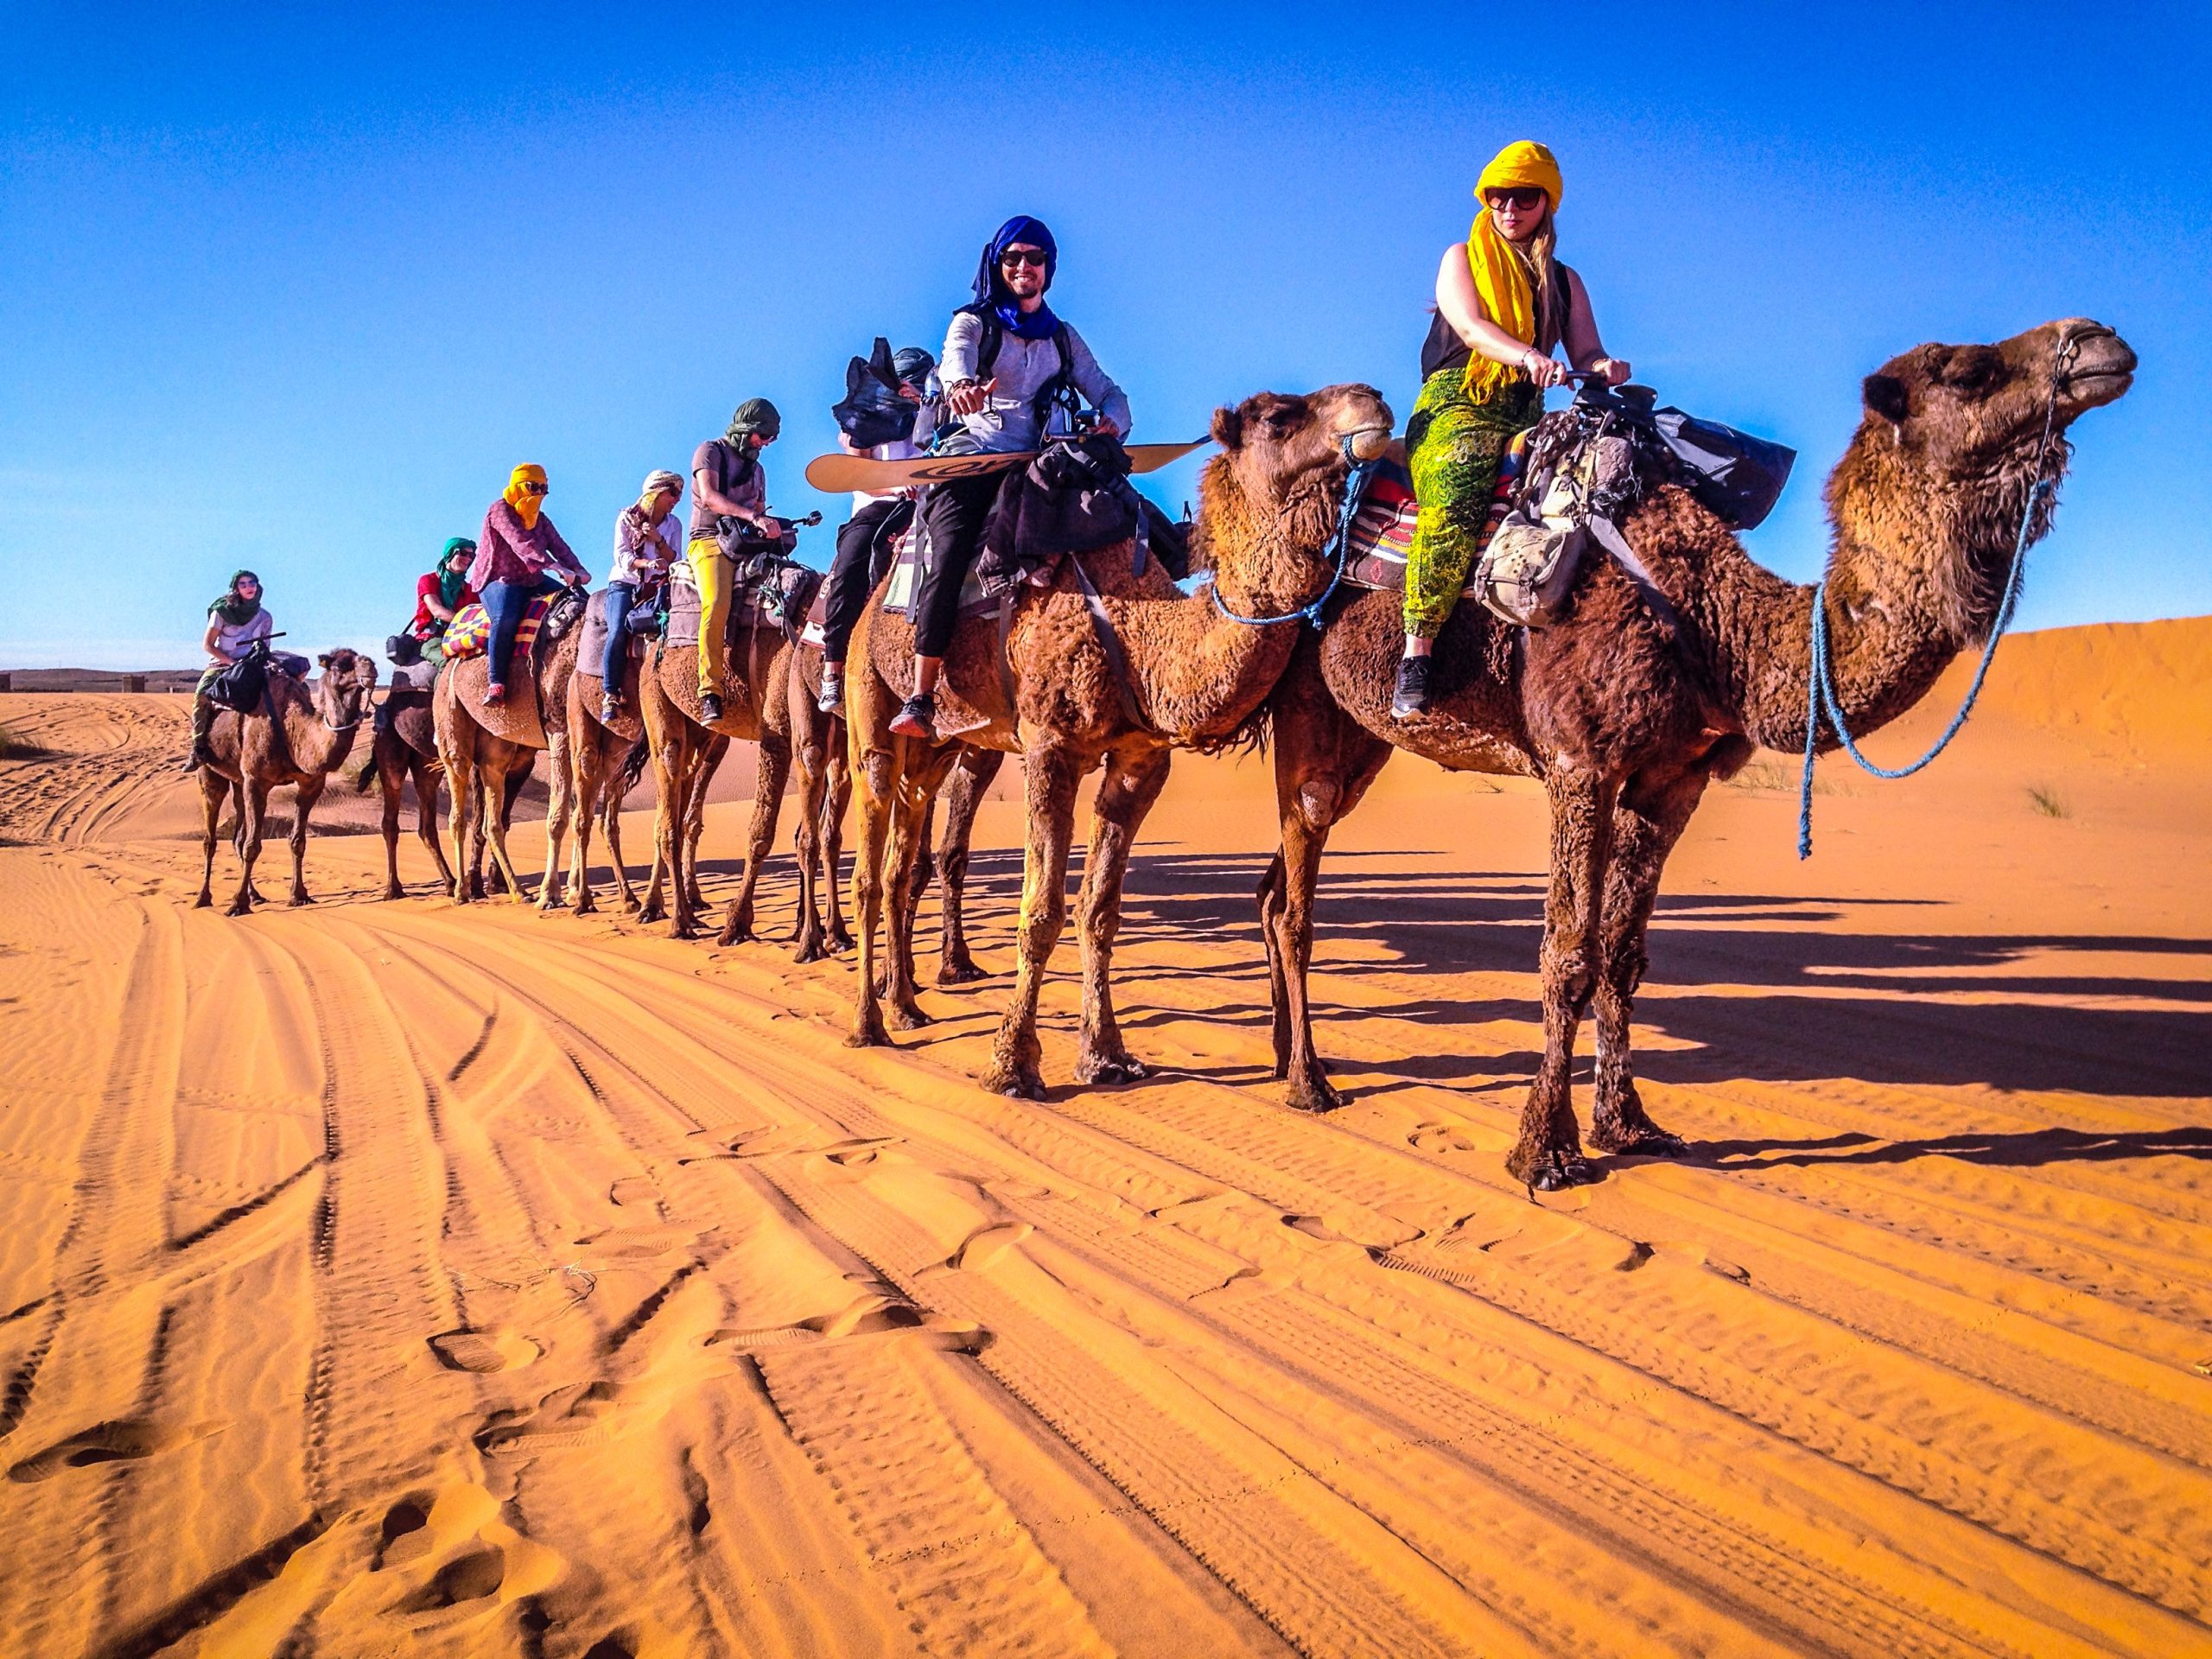 Marruecos recibió 4 millones de turistas a finales de abril - Rue20.com